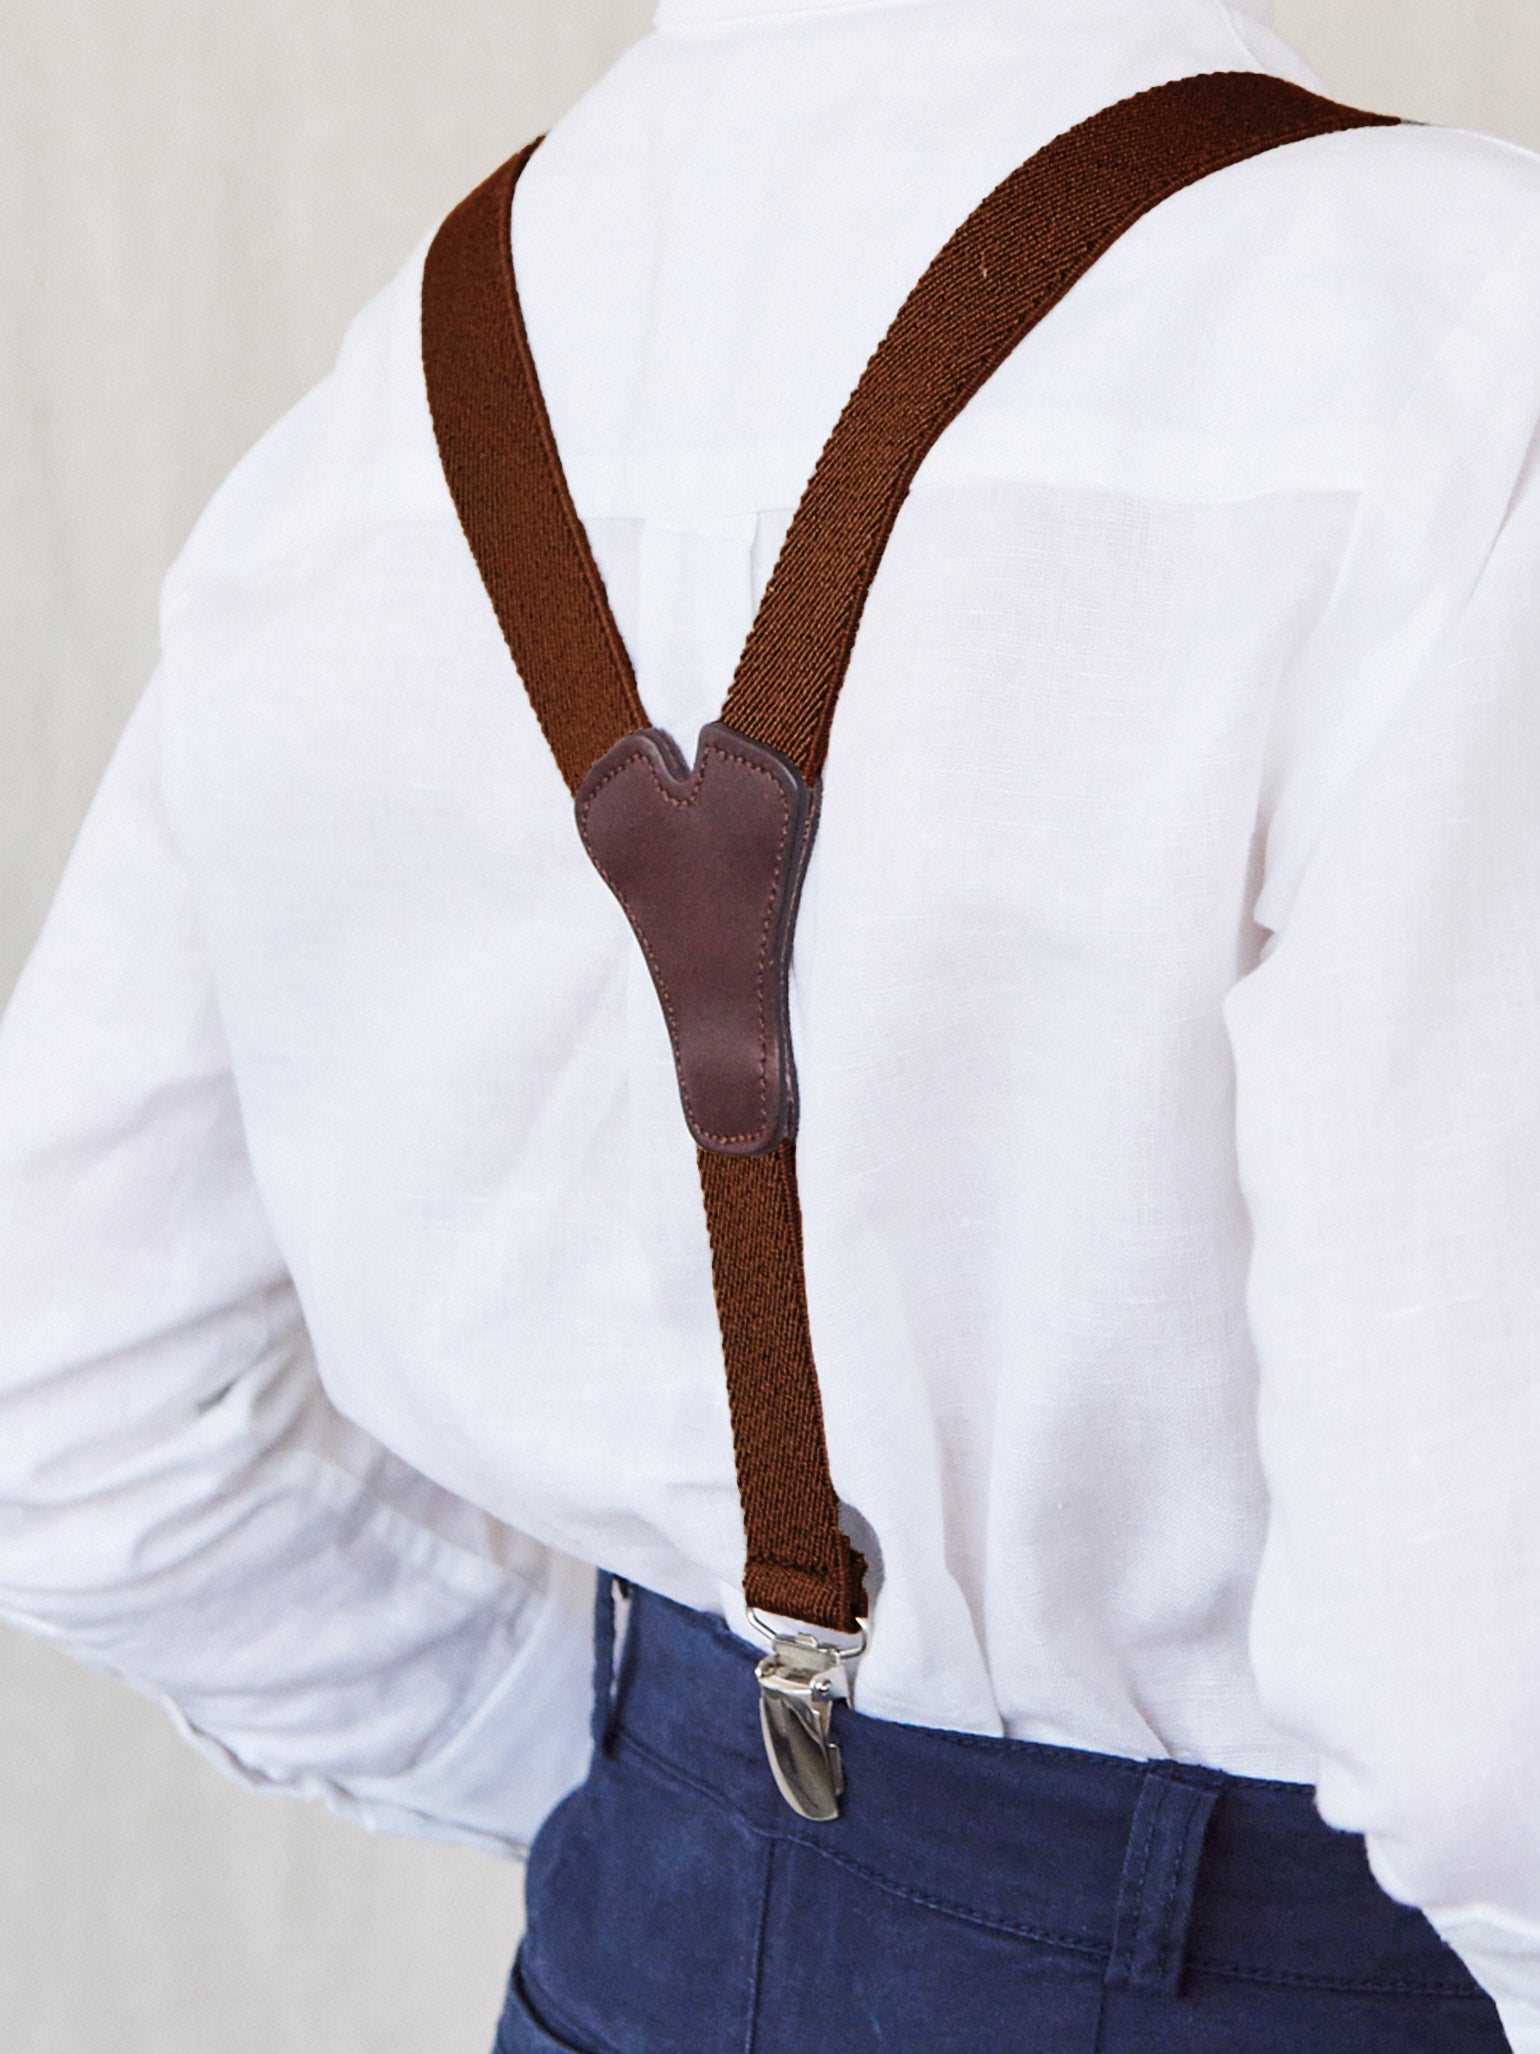 What are the advantages of a trouser belt versus braces? - Quora